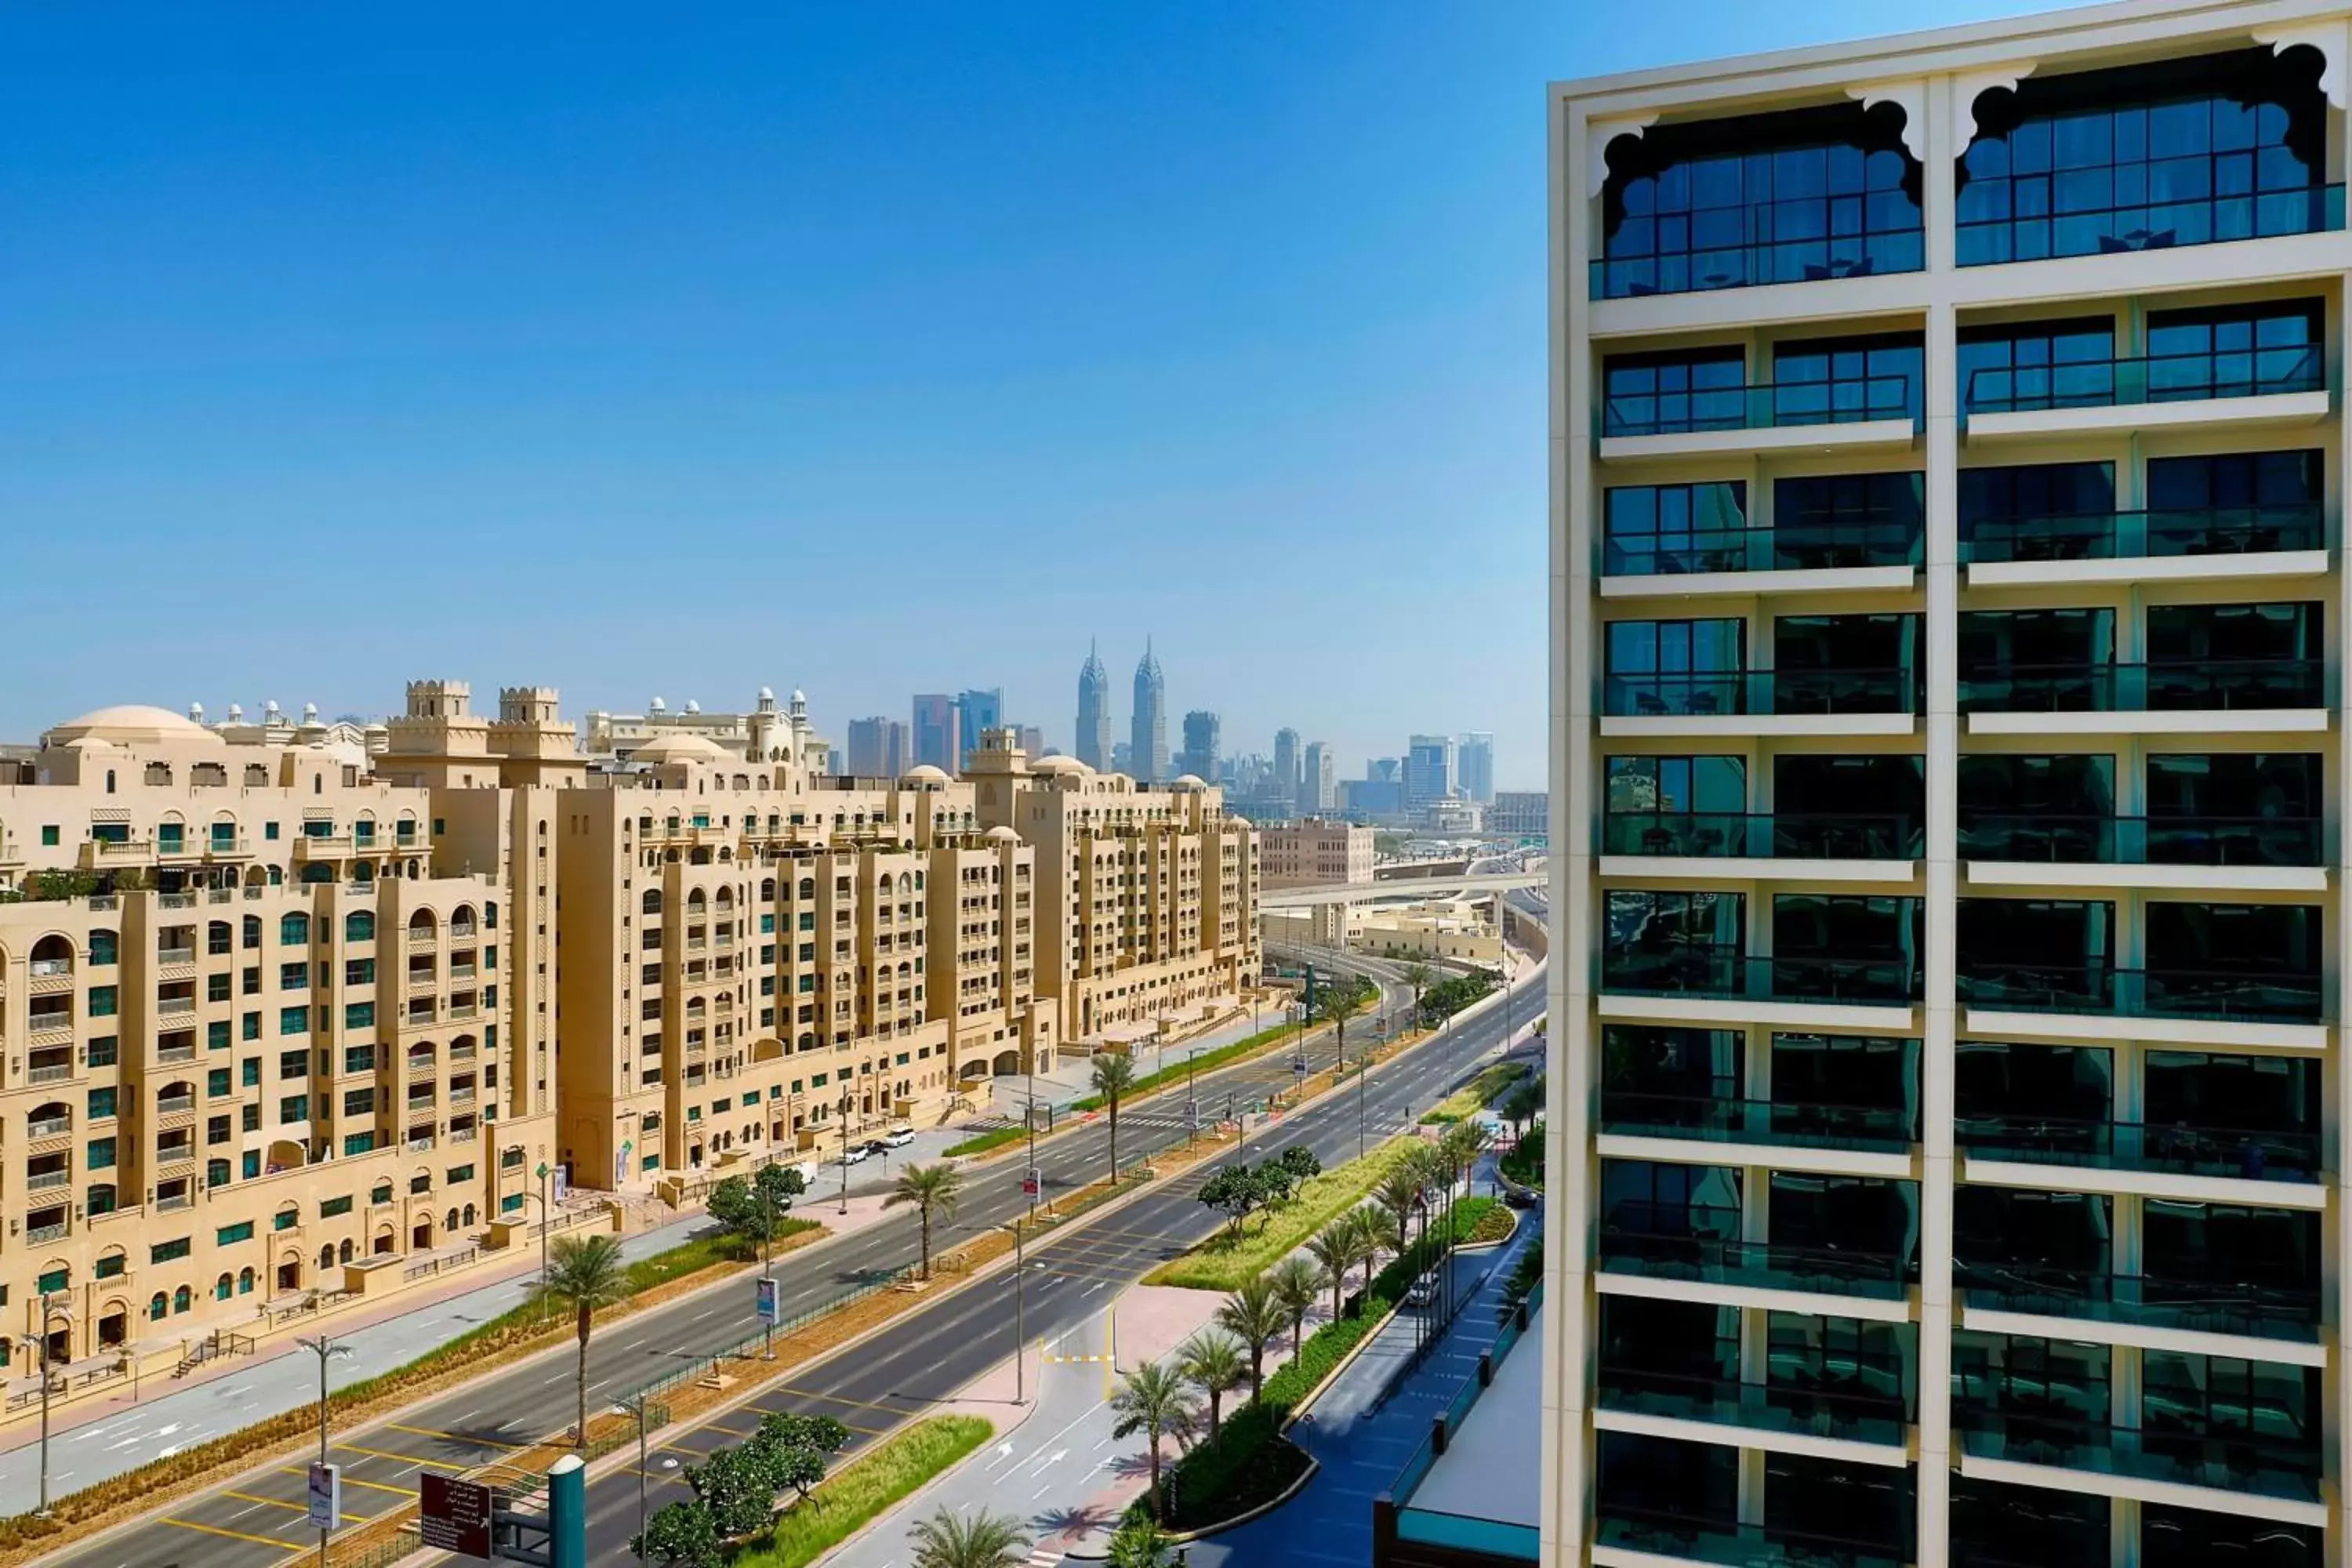 Property building in Marriott Resort Palm Jumeirah, Dubai